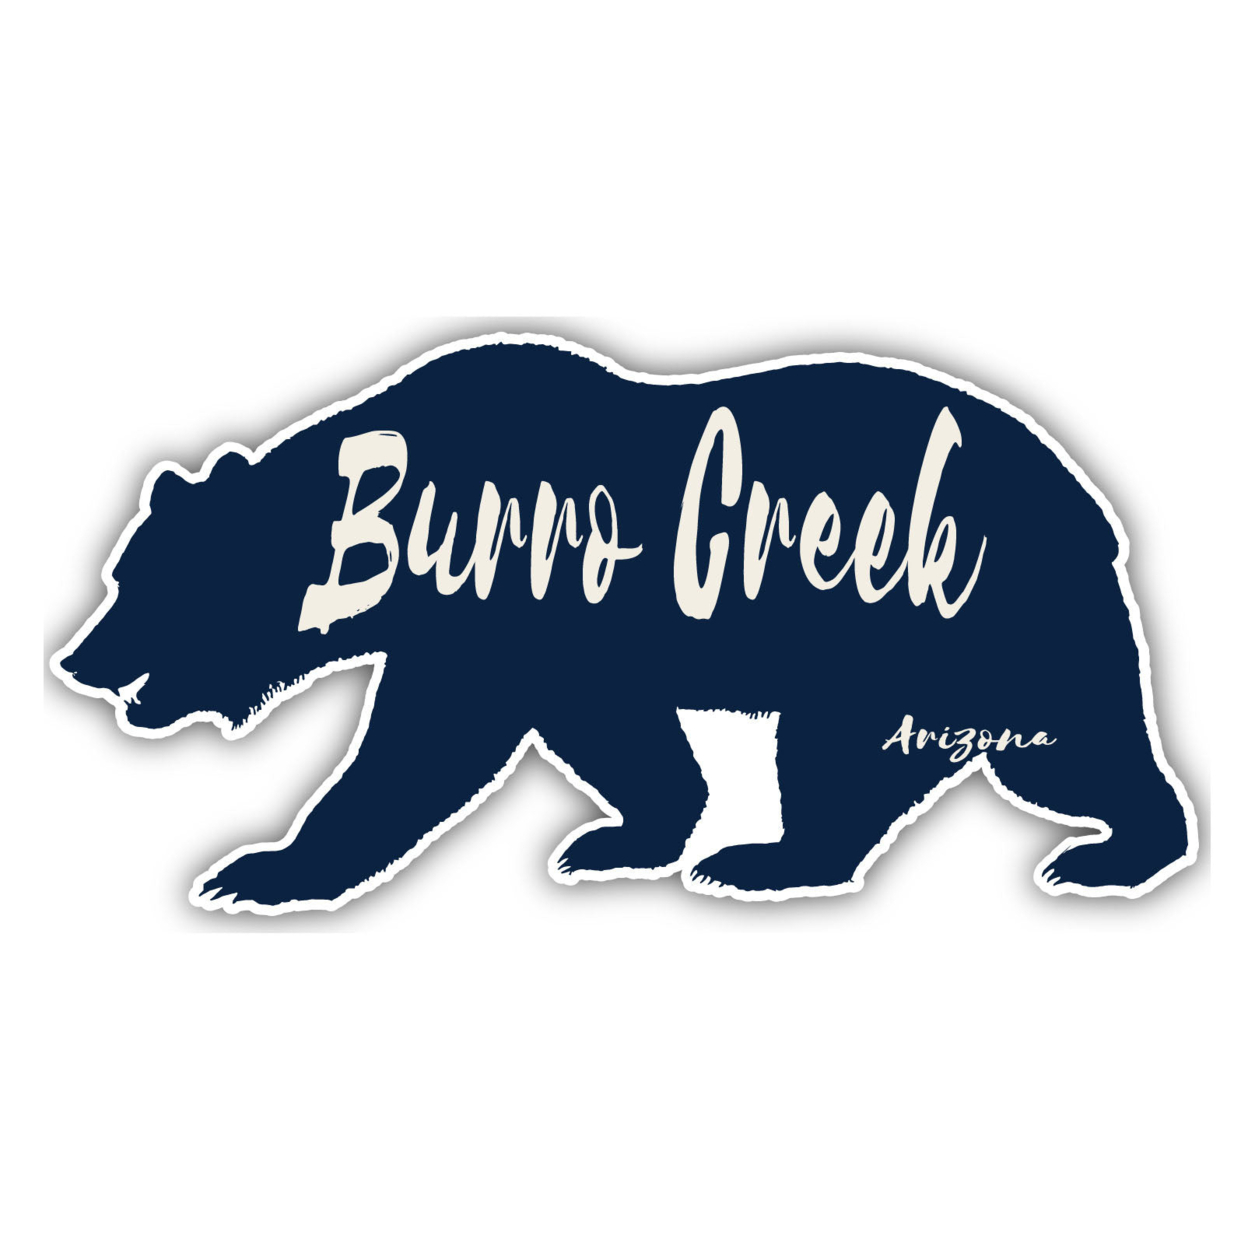 Burro Creek Arizona Souvenir Decorative Stickers (Choose Theme And Size) - Single Unit, 6-Inch, Bear